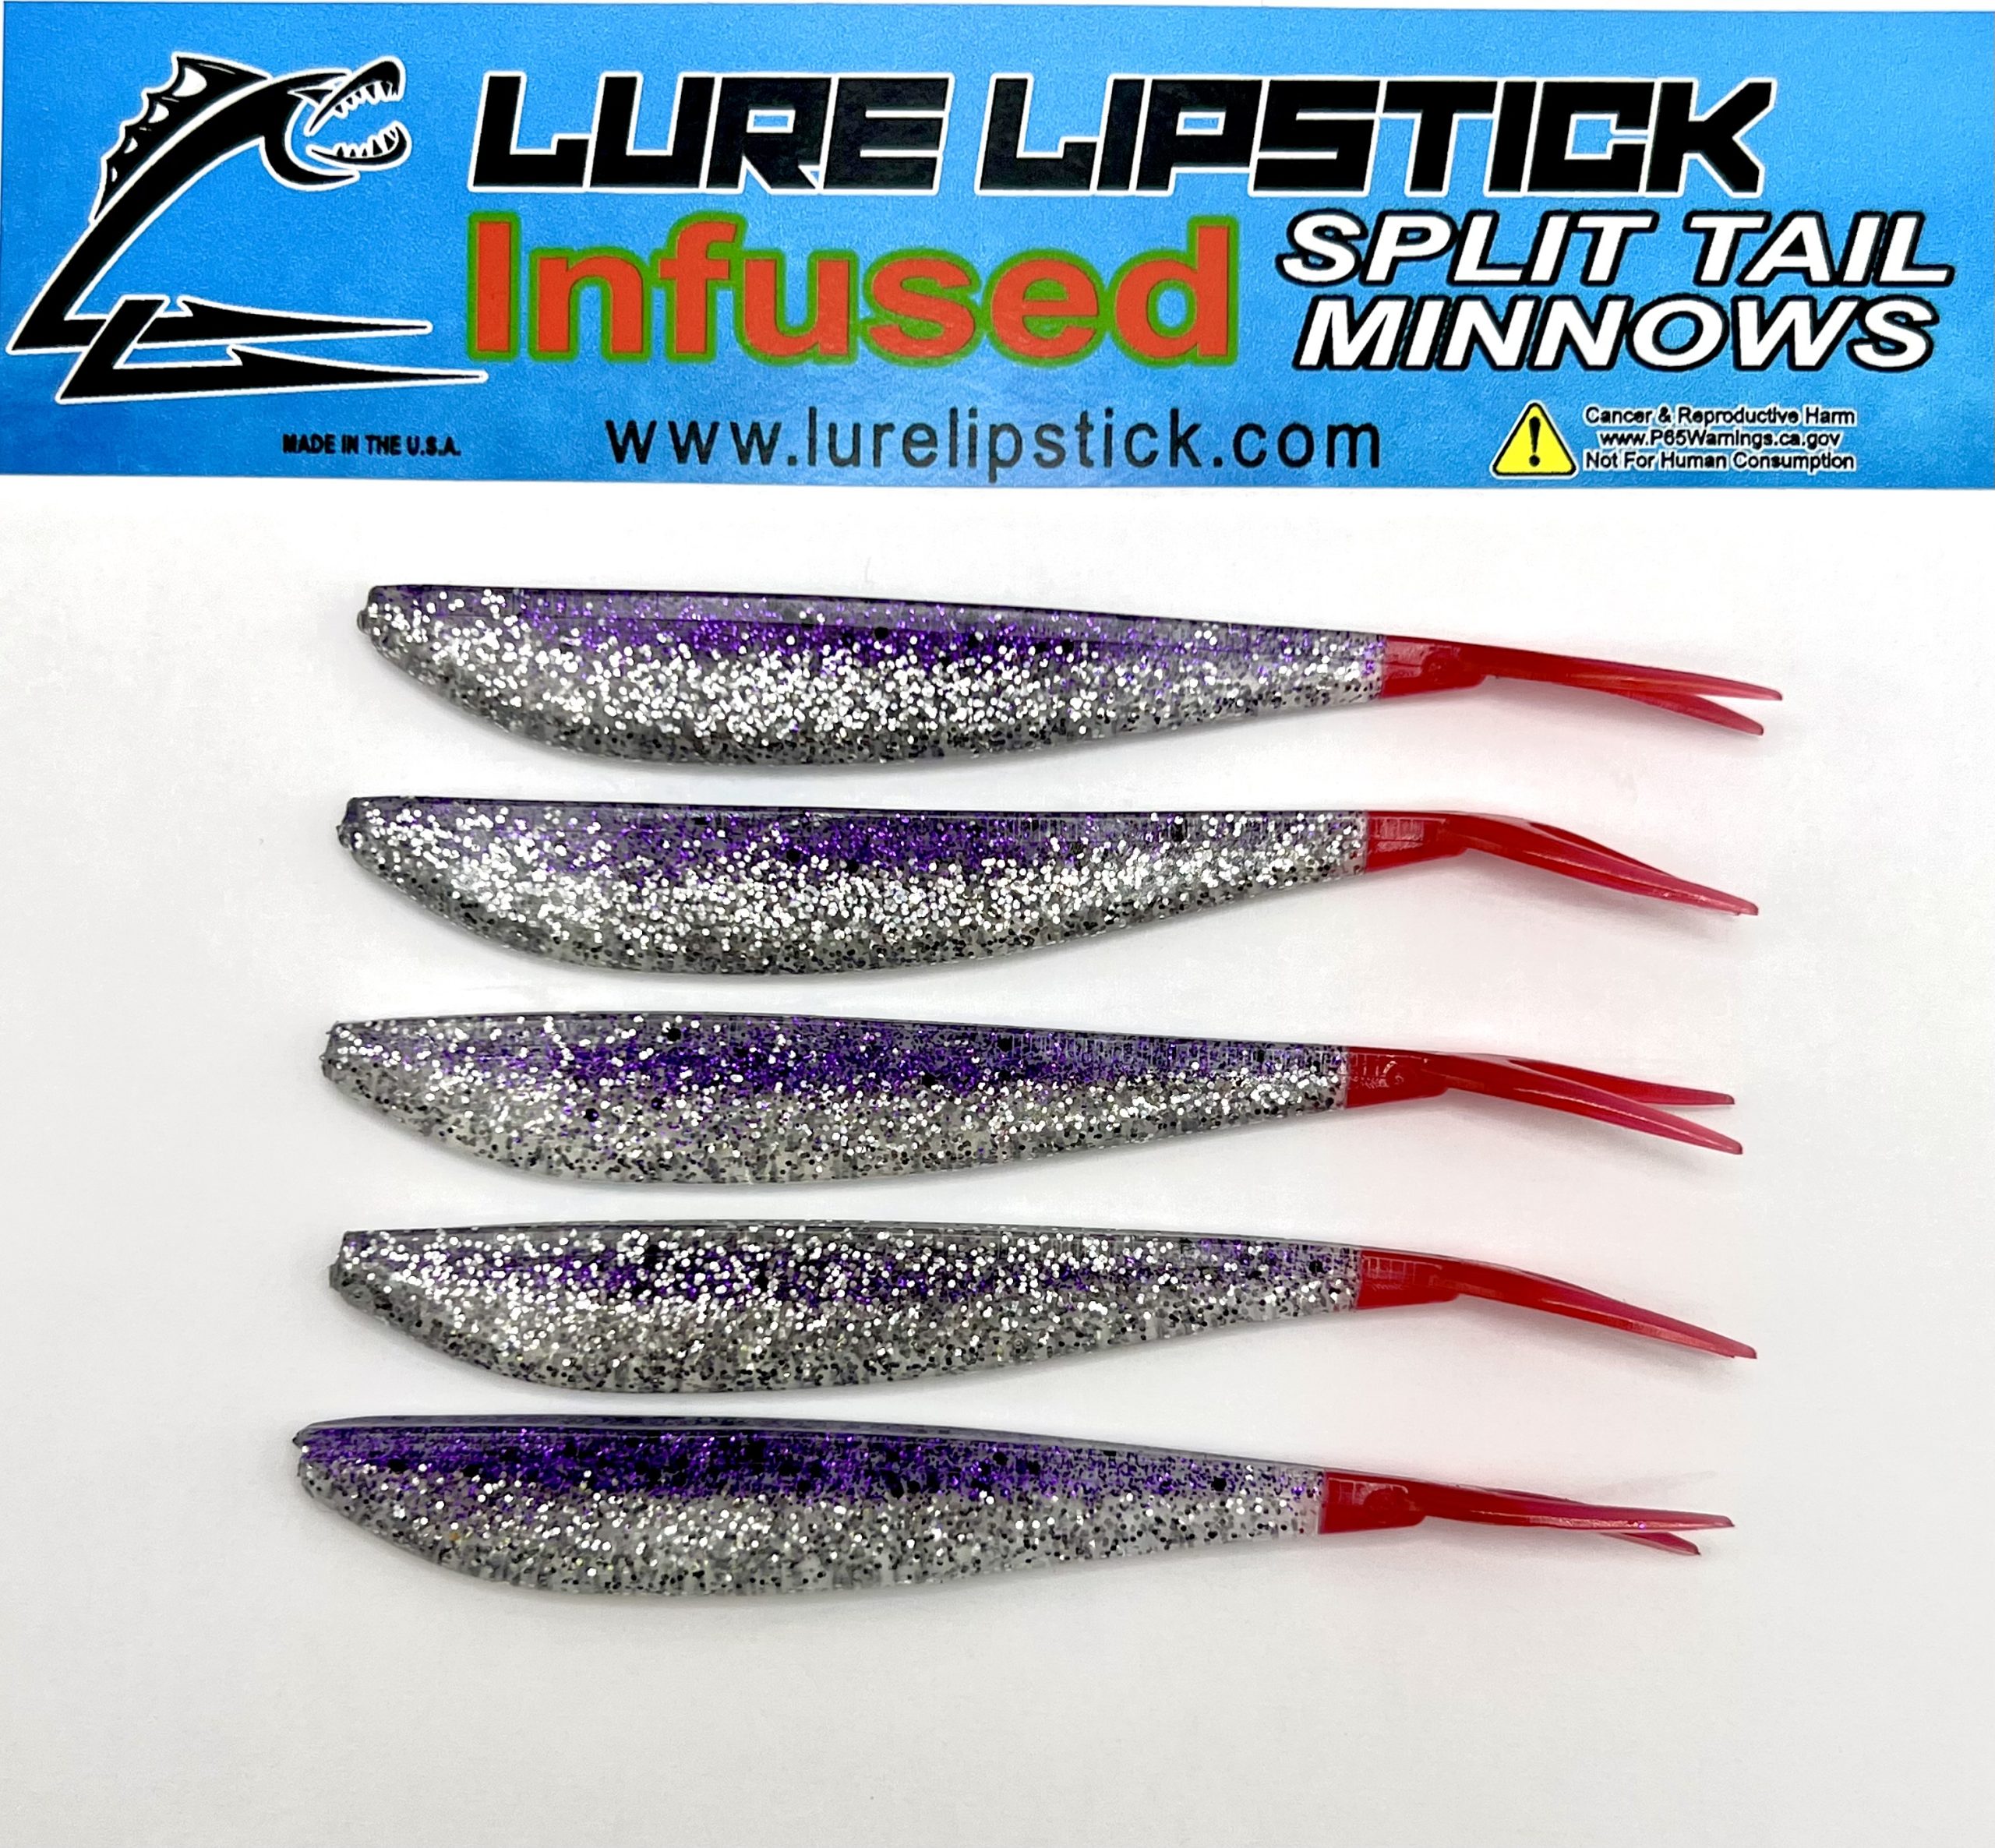 4in 5 Pack Custom Infused Split Tail Minnows - Purple Ice Wonderbread